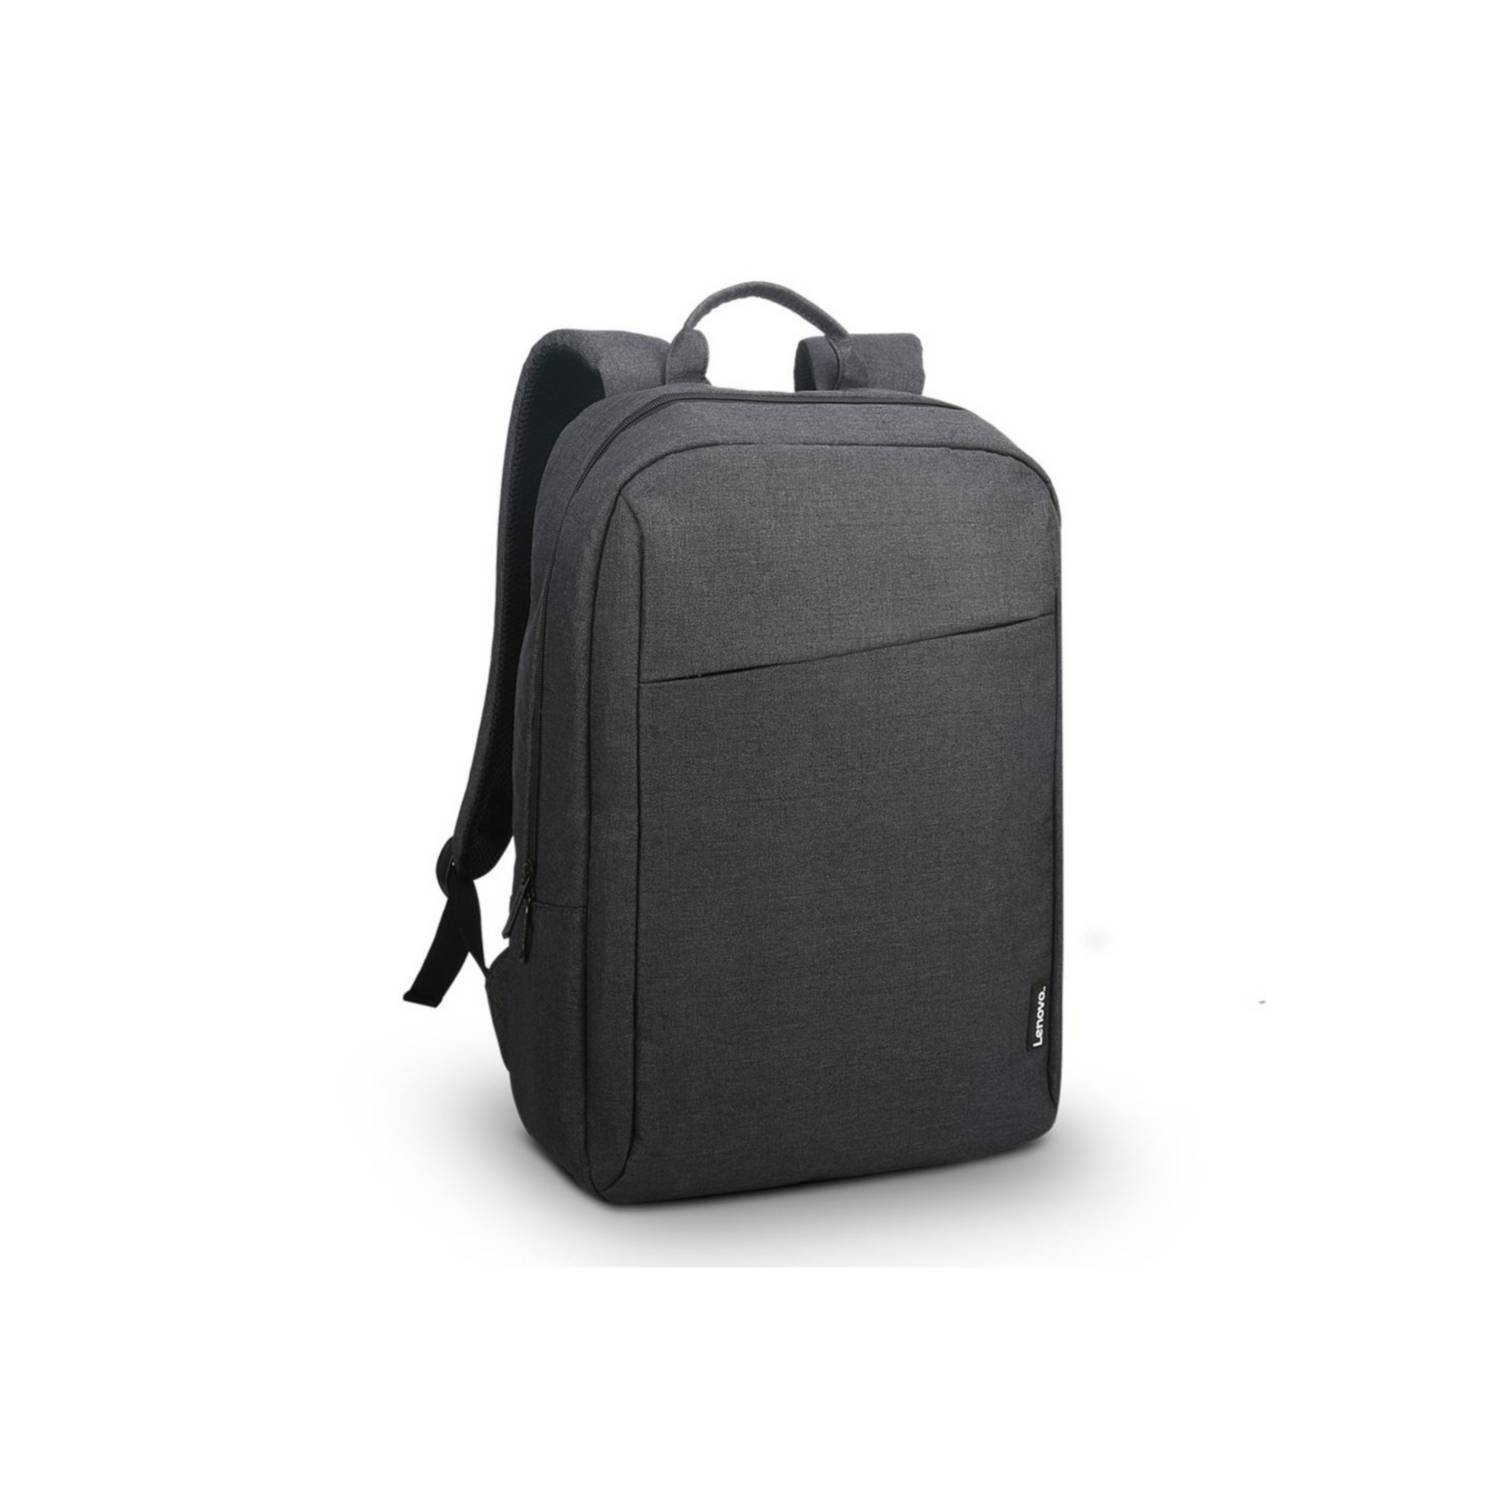 Mochila Lenovo Casual Backpack B210 Black 15.6 - 4X40T84059